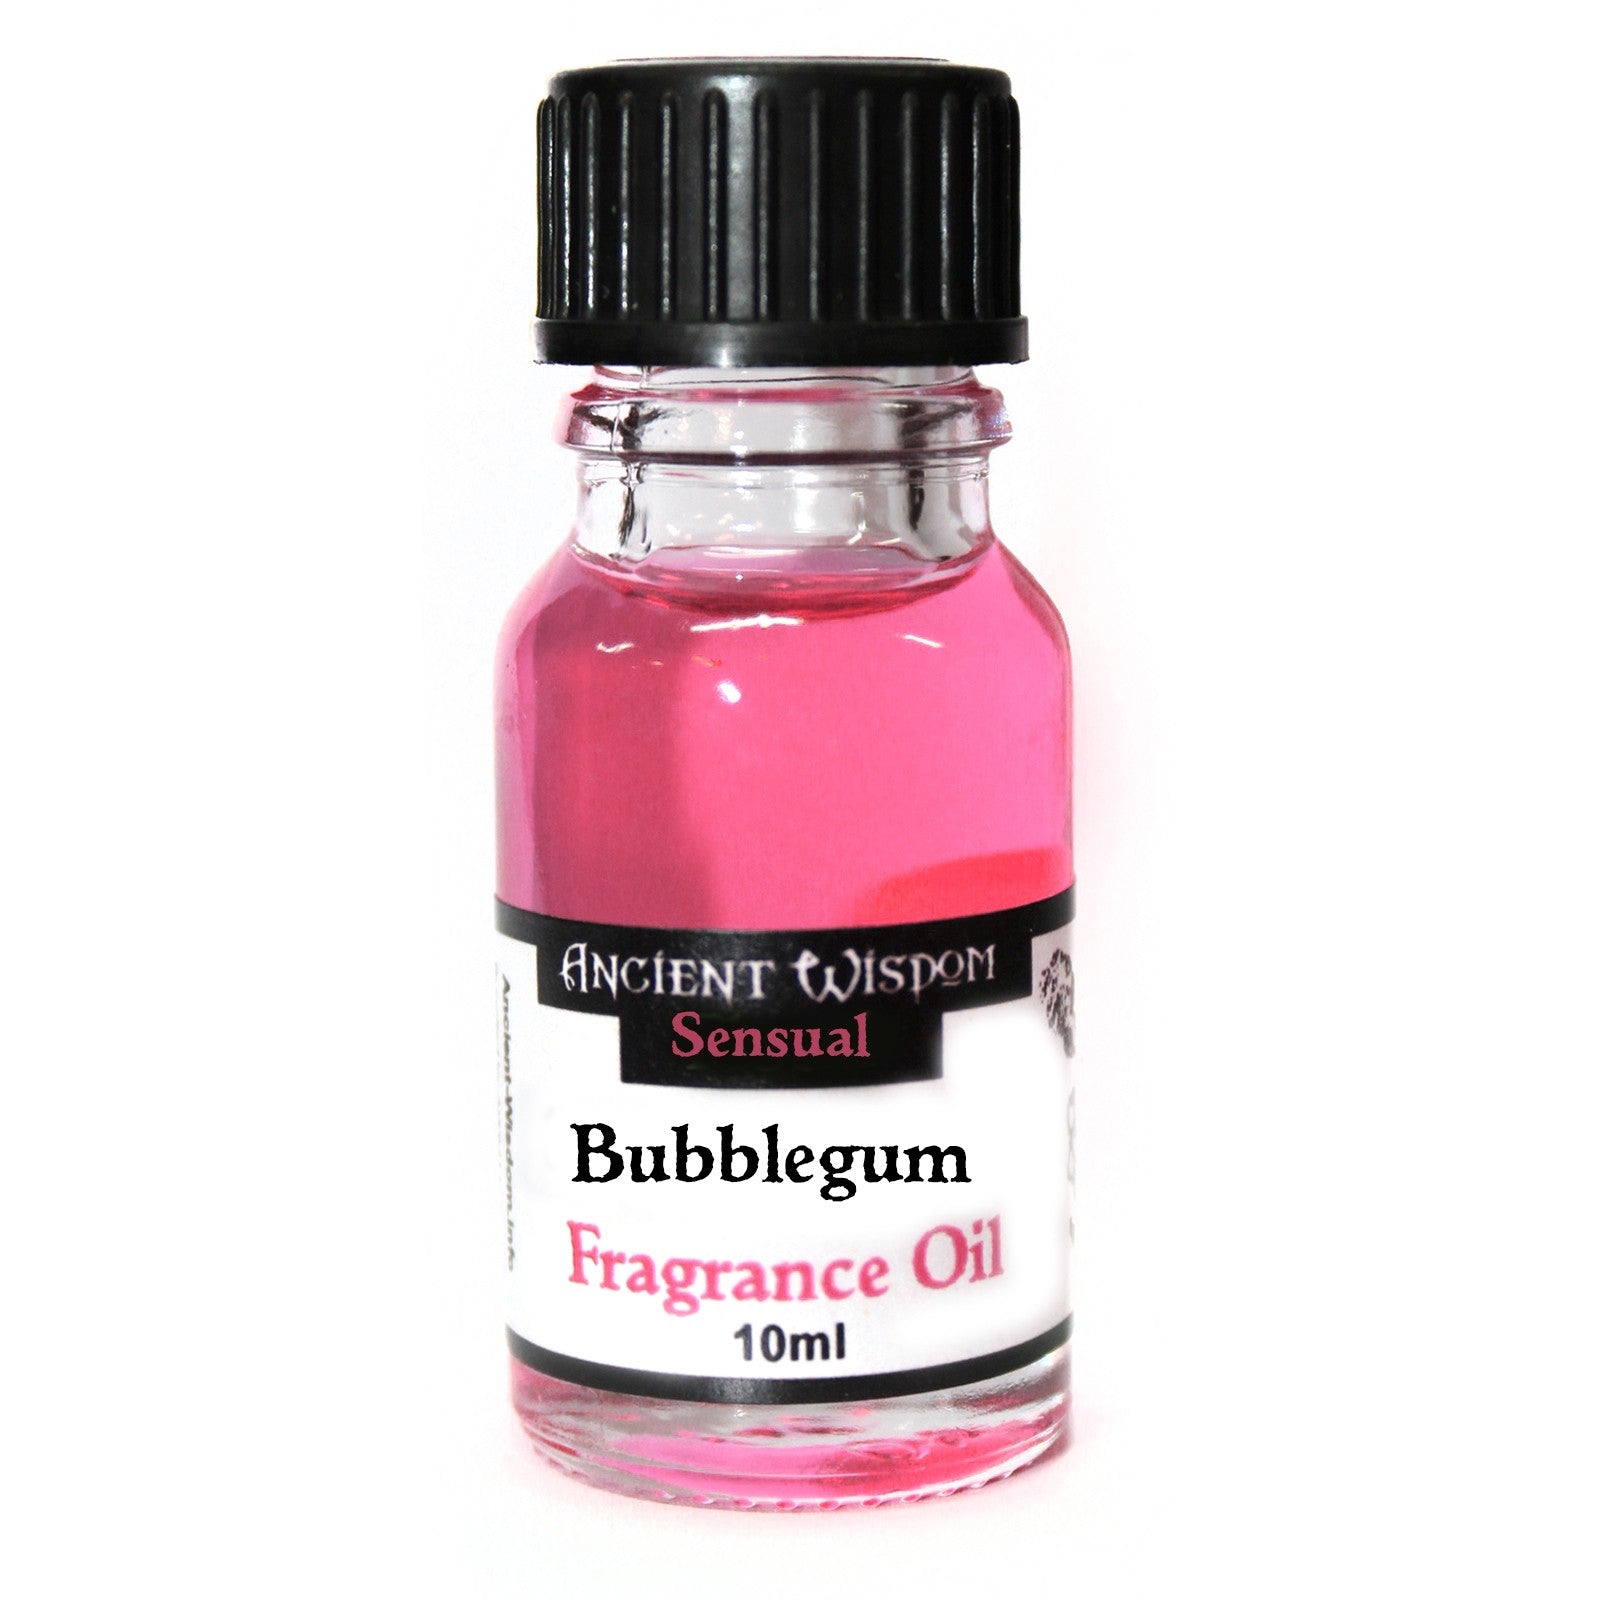 View 10ml Bubblegum Fragrance Oil information